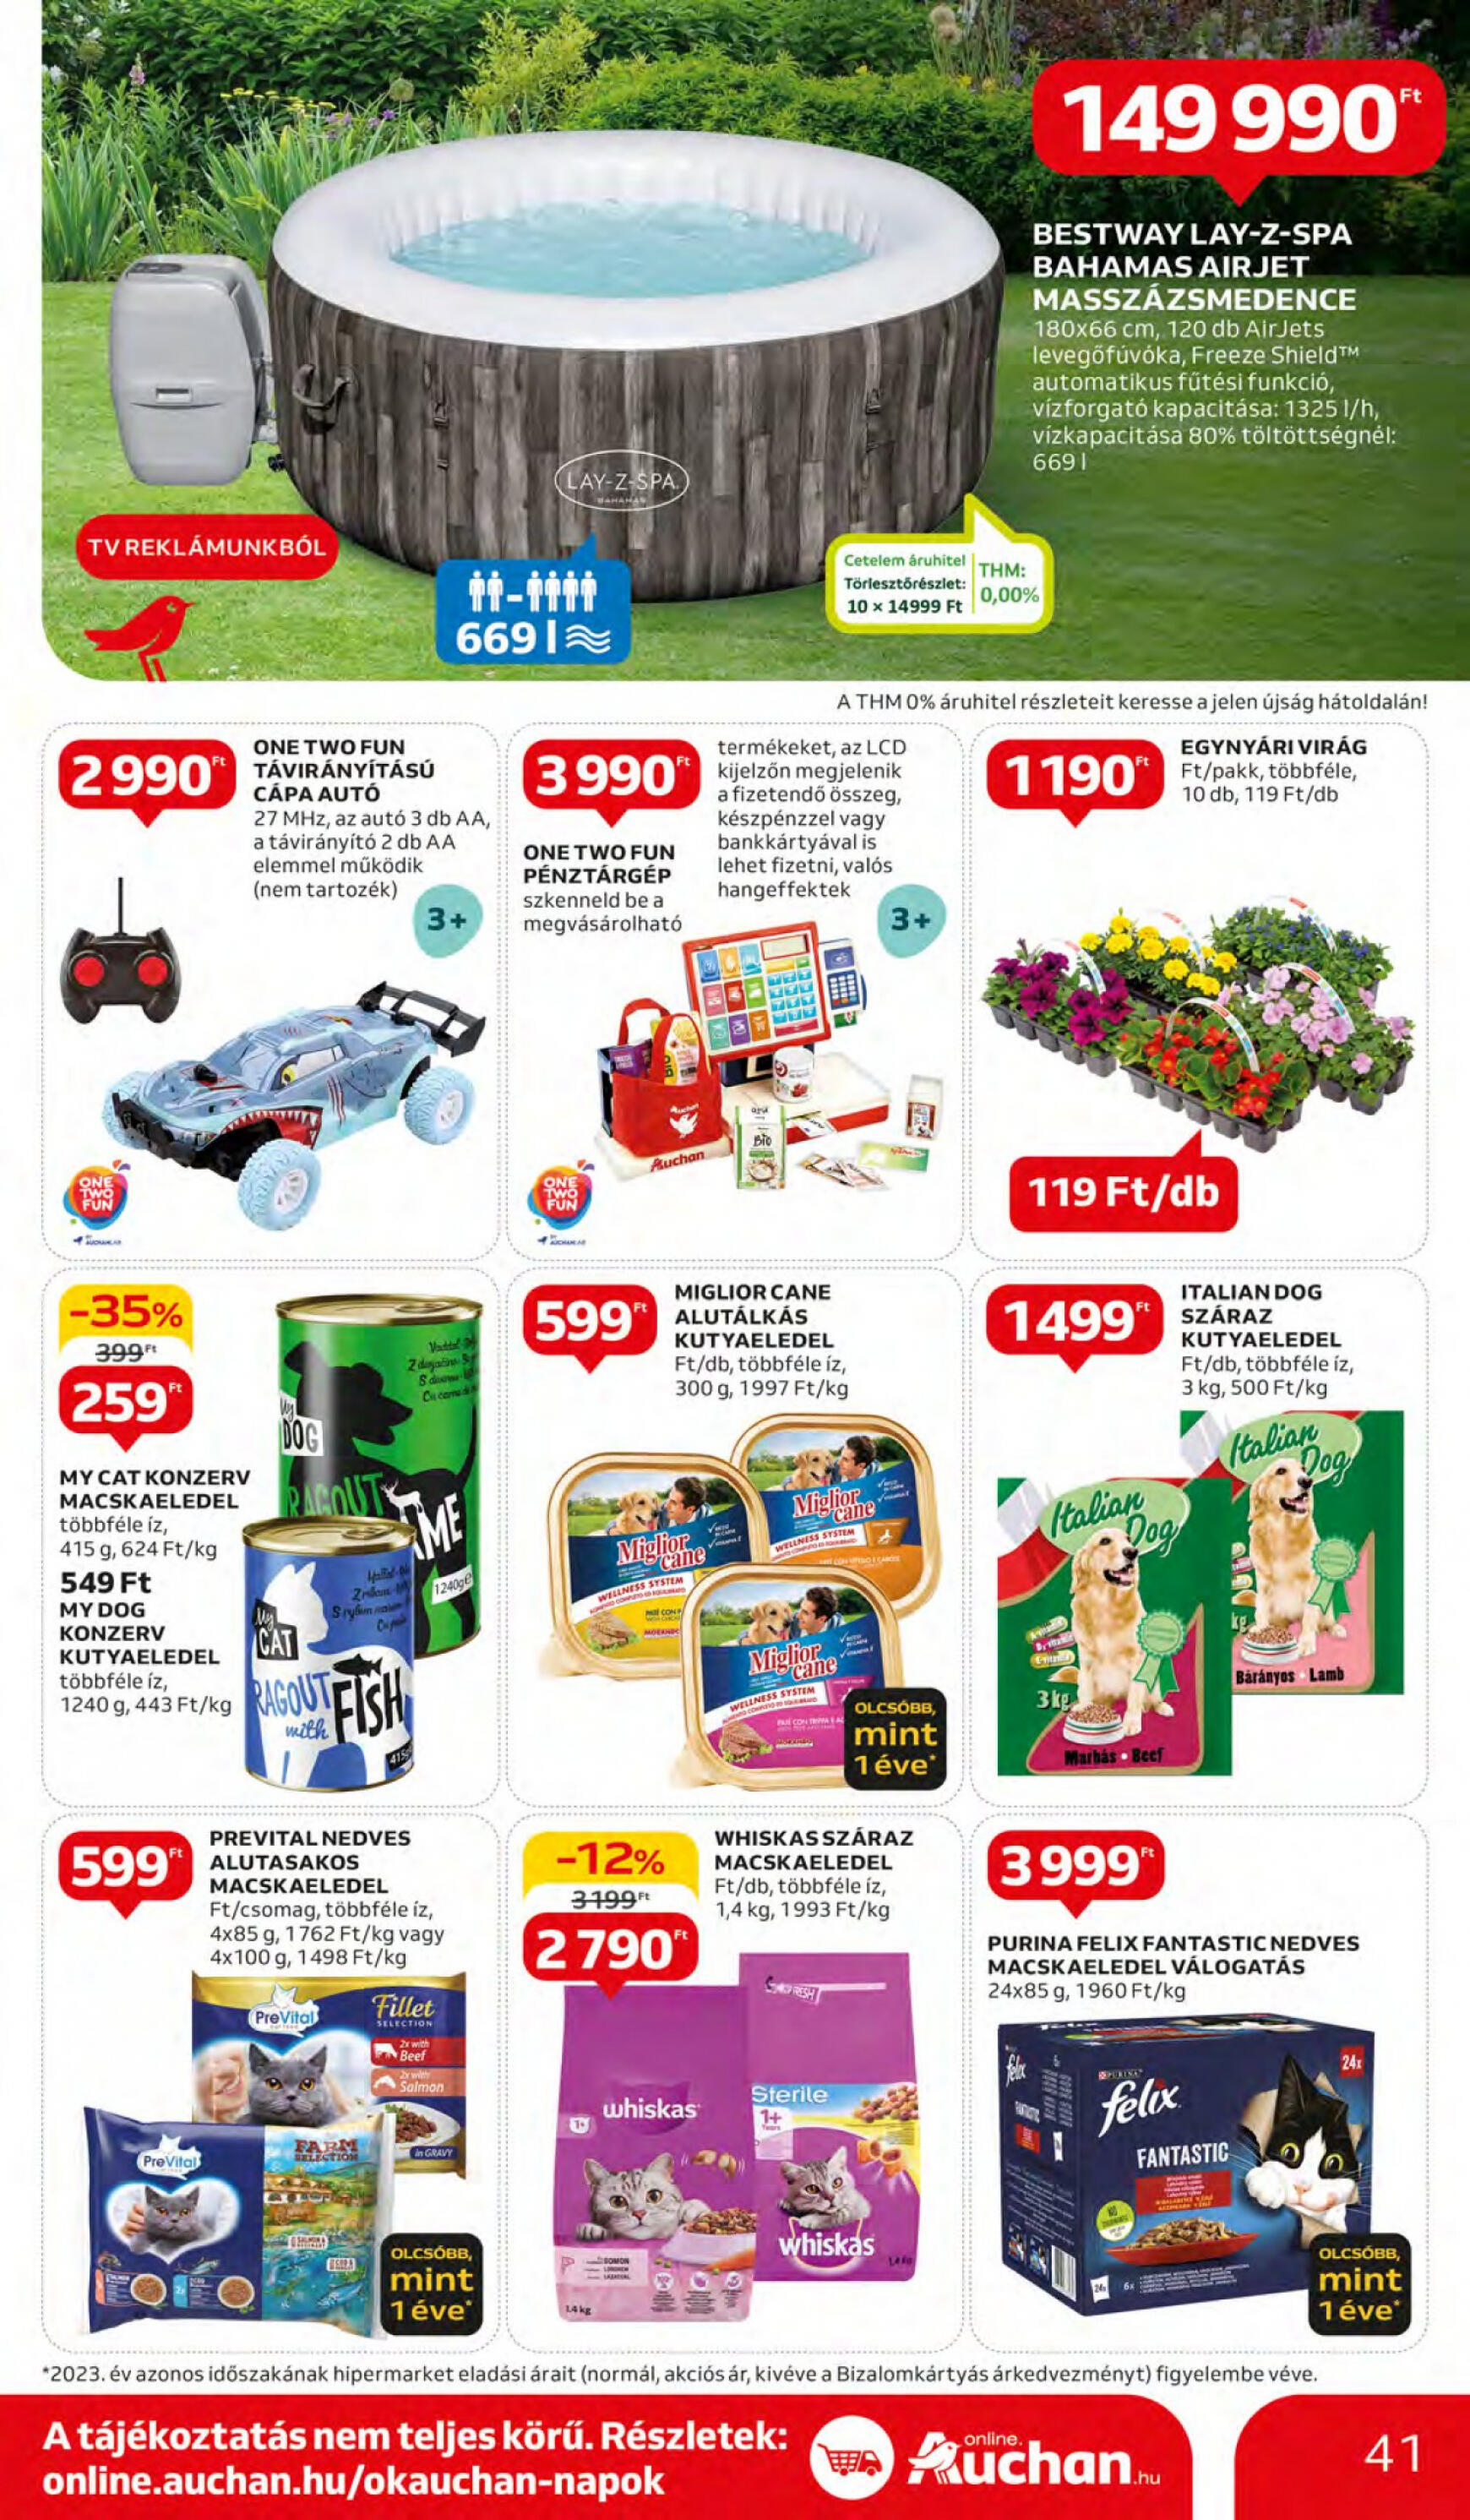 auchan - Aktuális újság Auchan 04.11. - 04.17. - page: 41